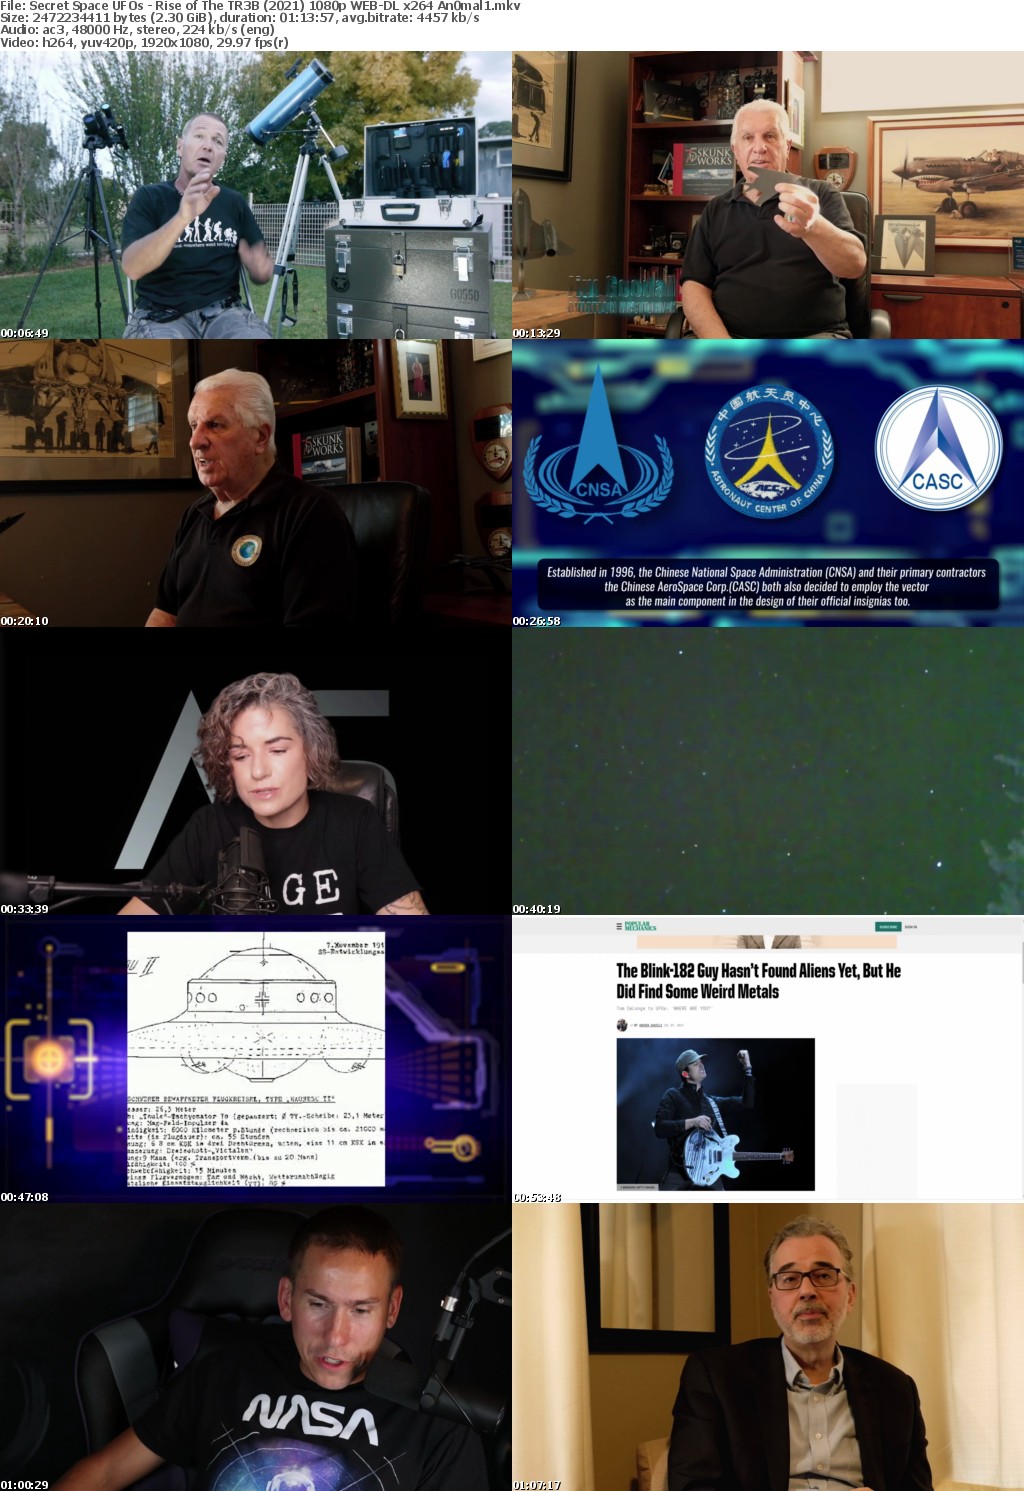 Secret Space UFOs - Rise of The TR3B (2021) 1080p WEB-DL x264 An0mal1